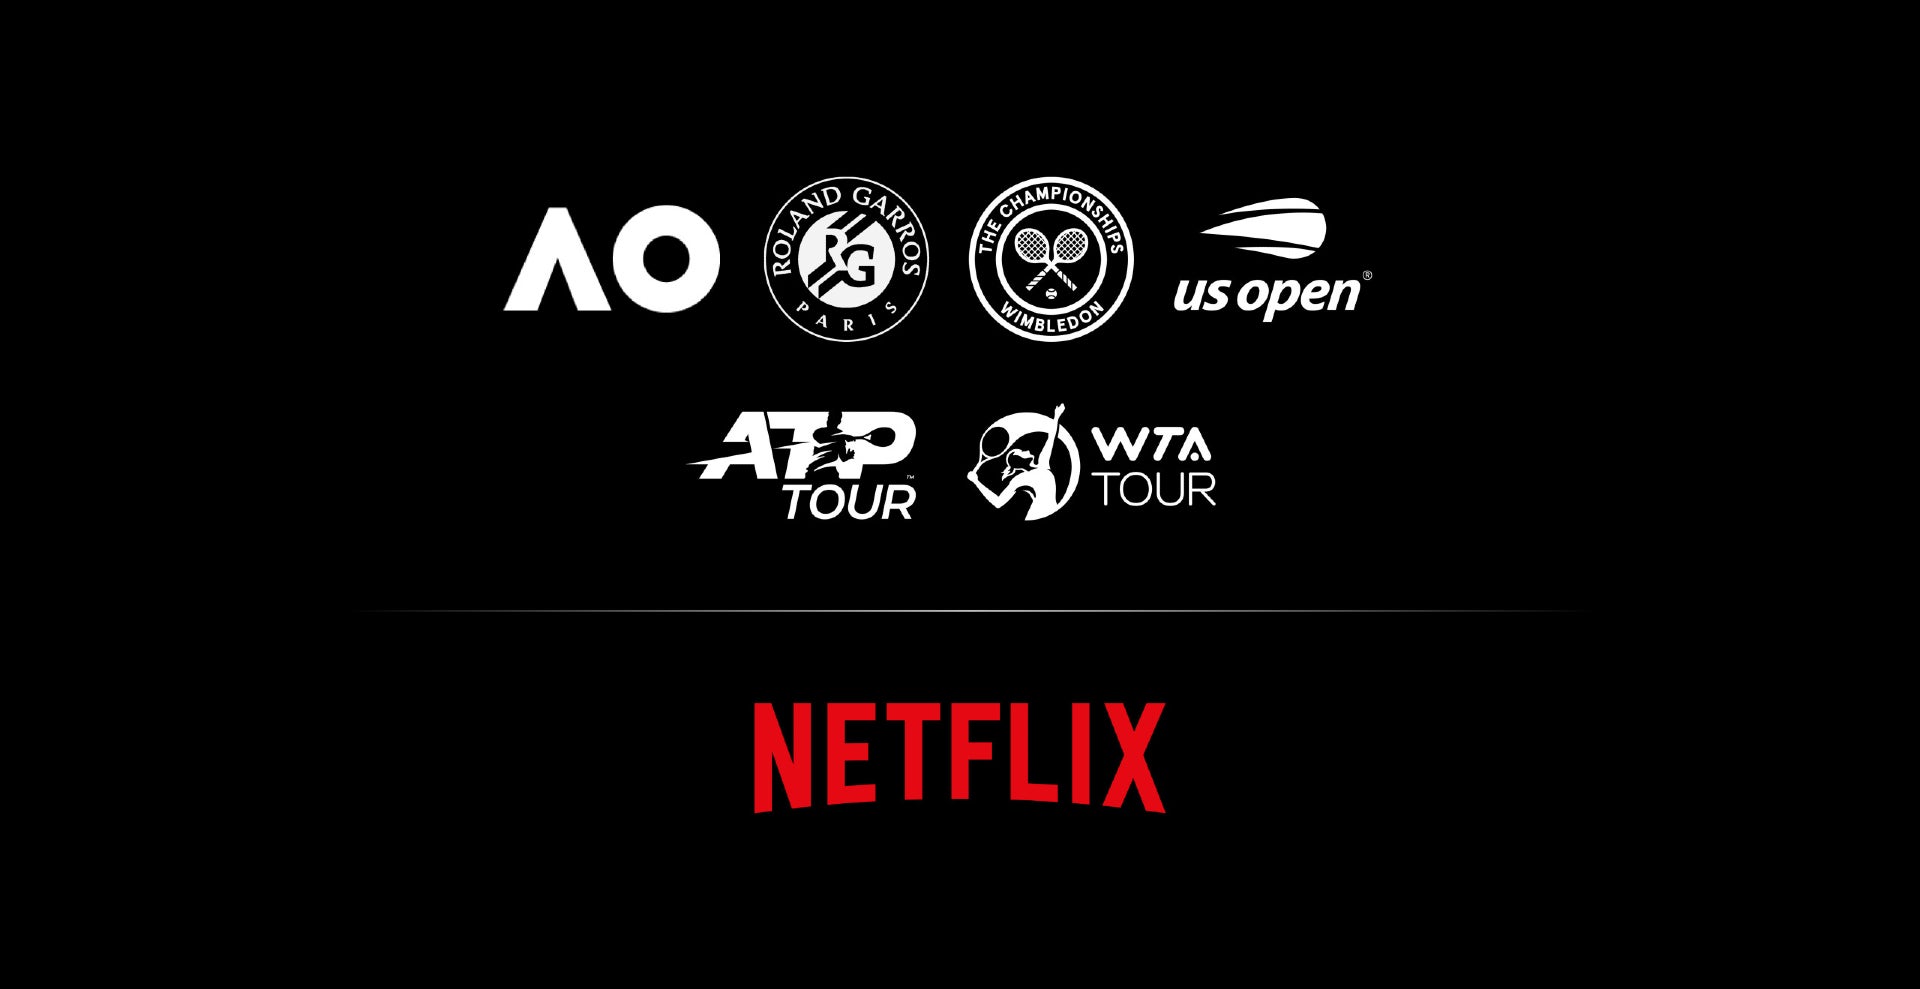 Netflix serves up another sports docuseries through ATP and WTA partnership 